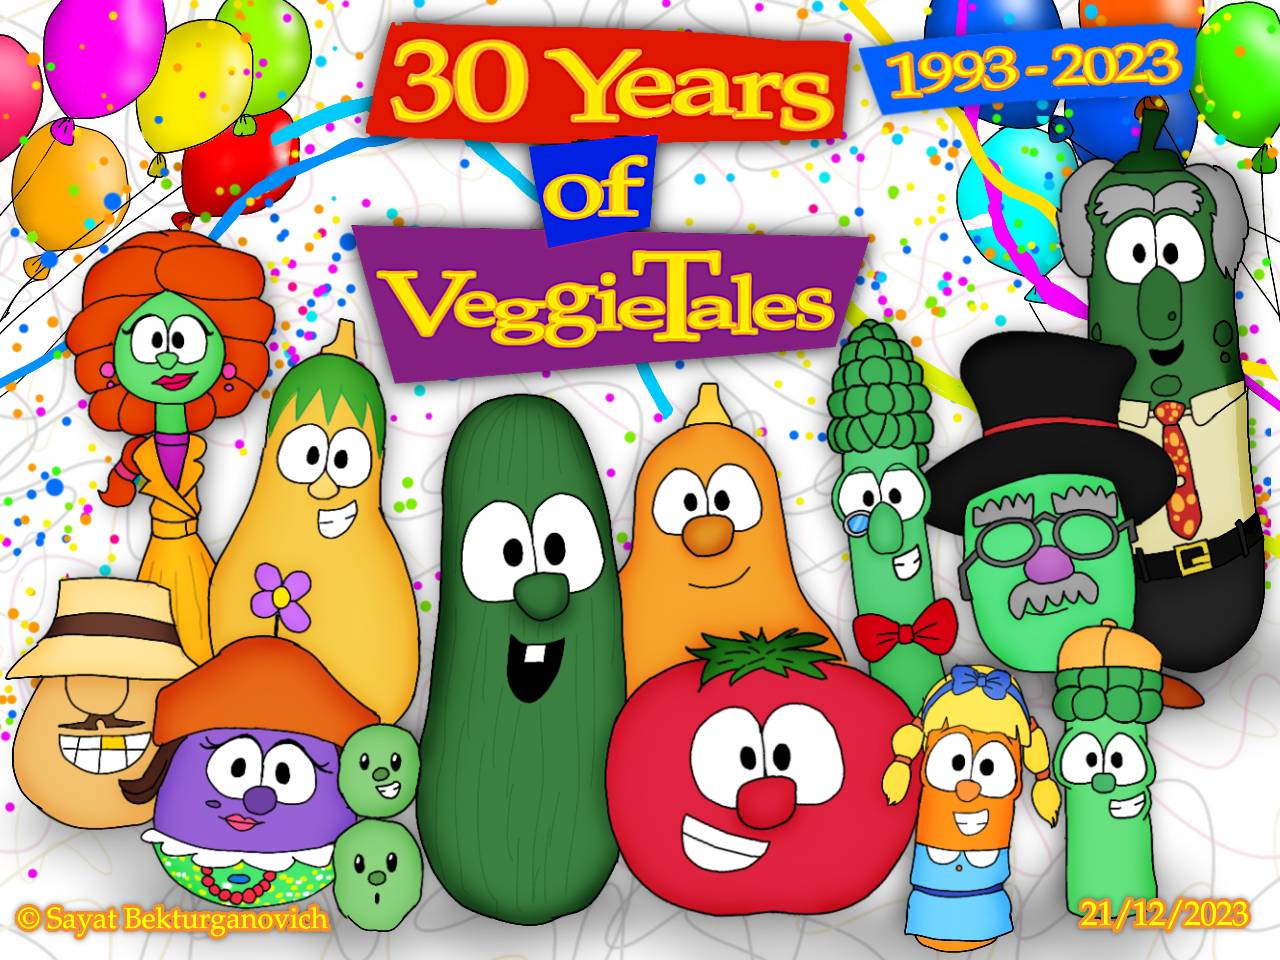 30 Years of VeggieTales! by Sayat-Bekturganovich on DeviantArt